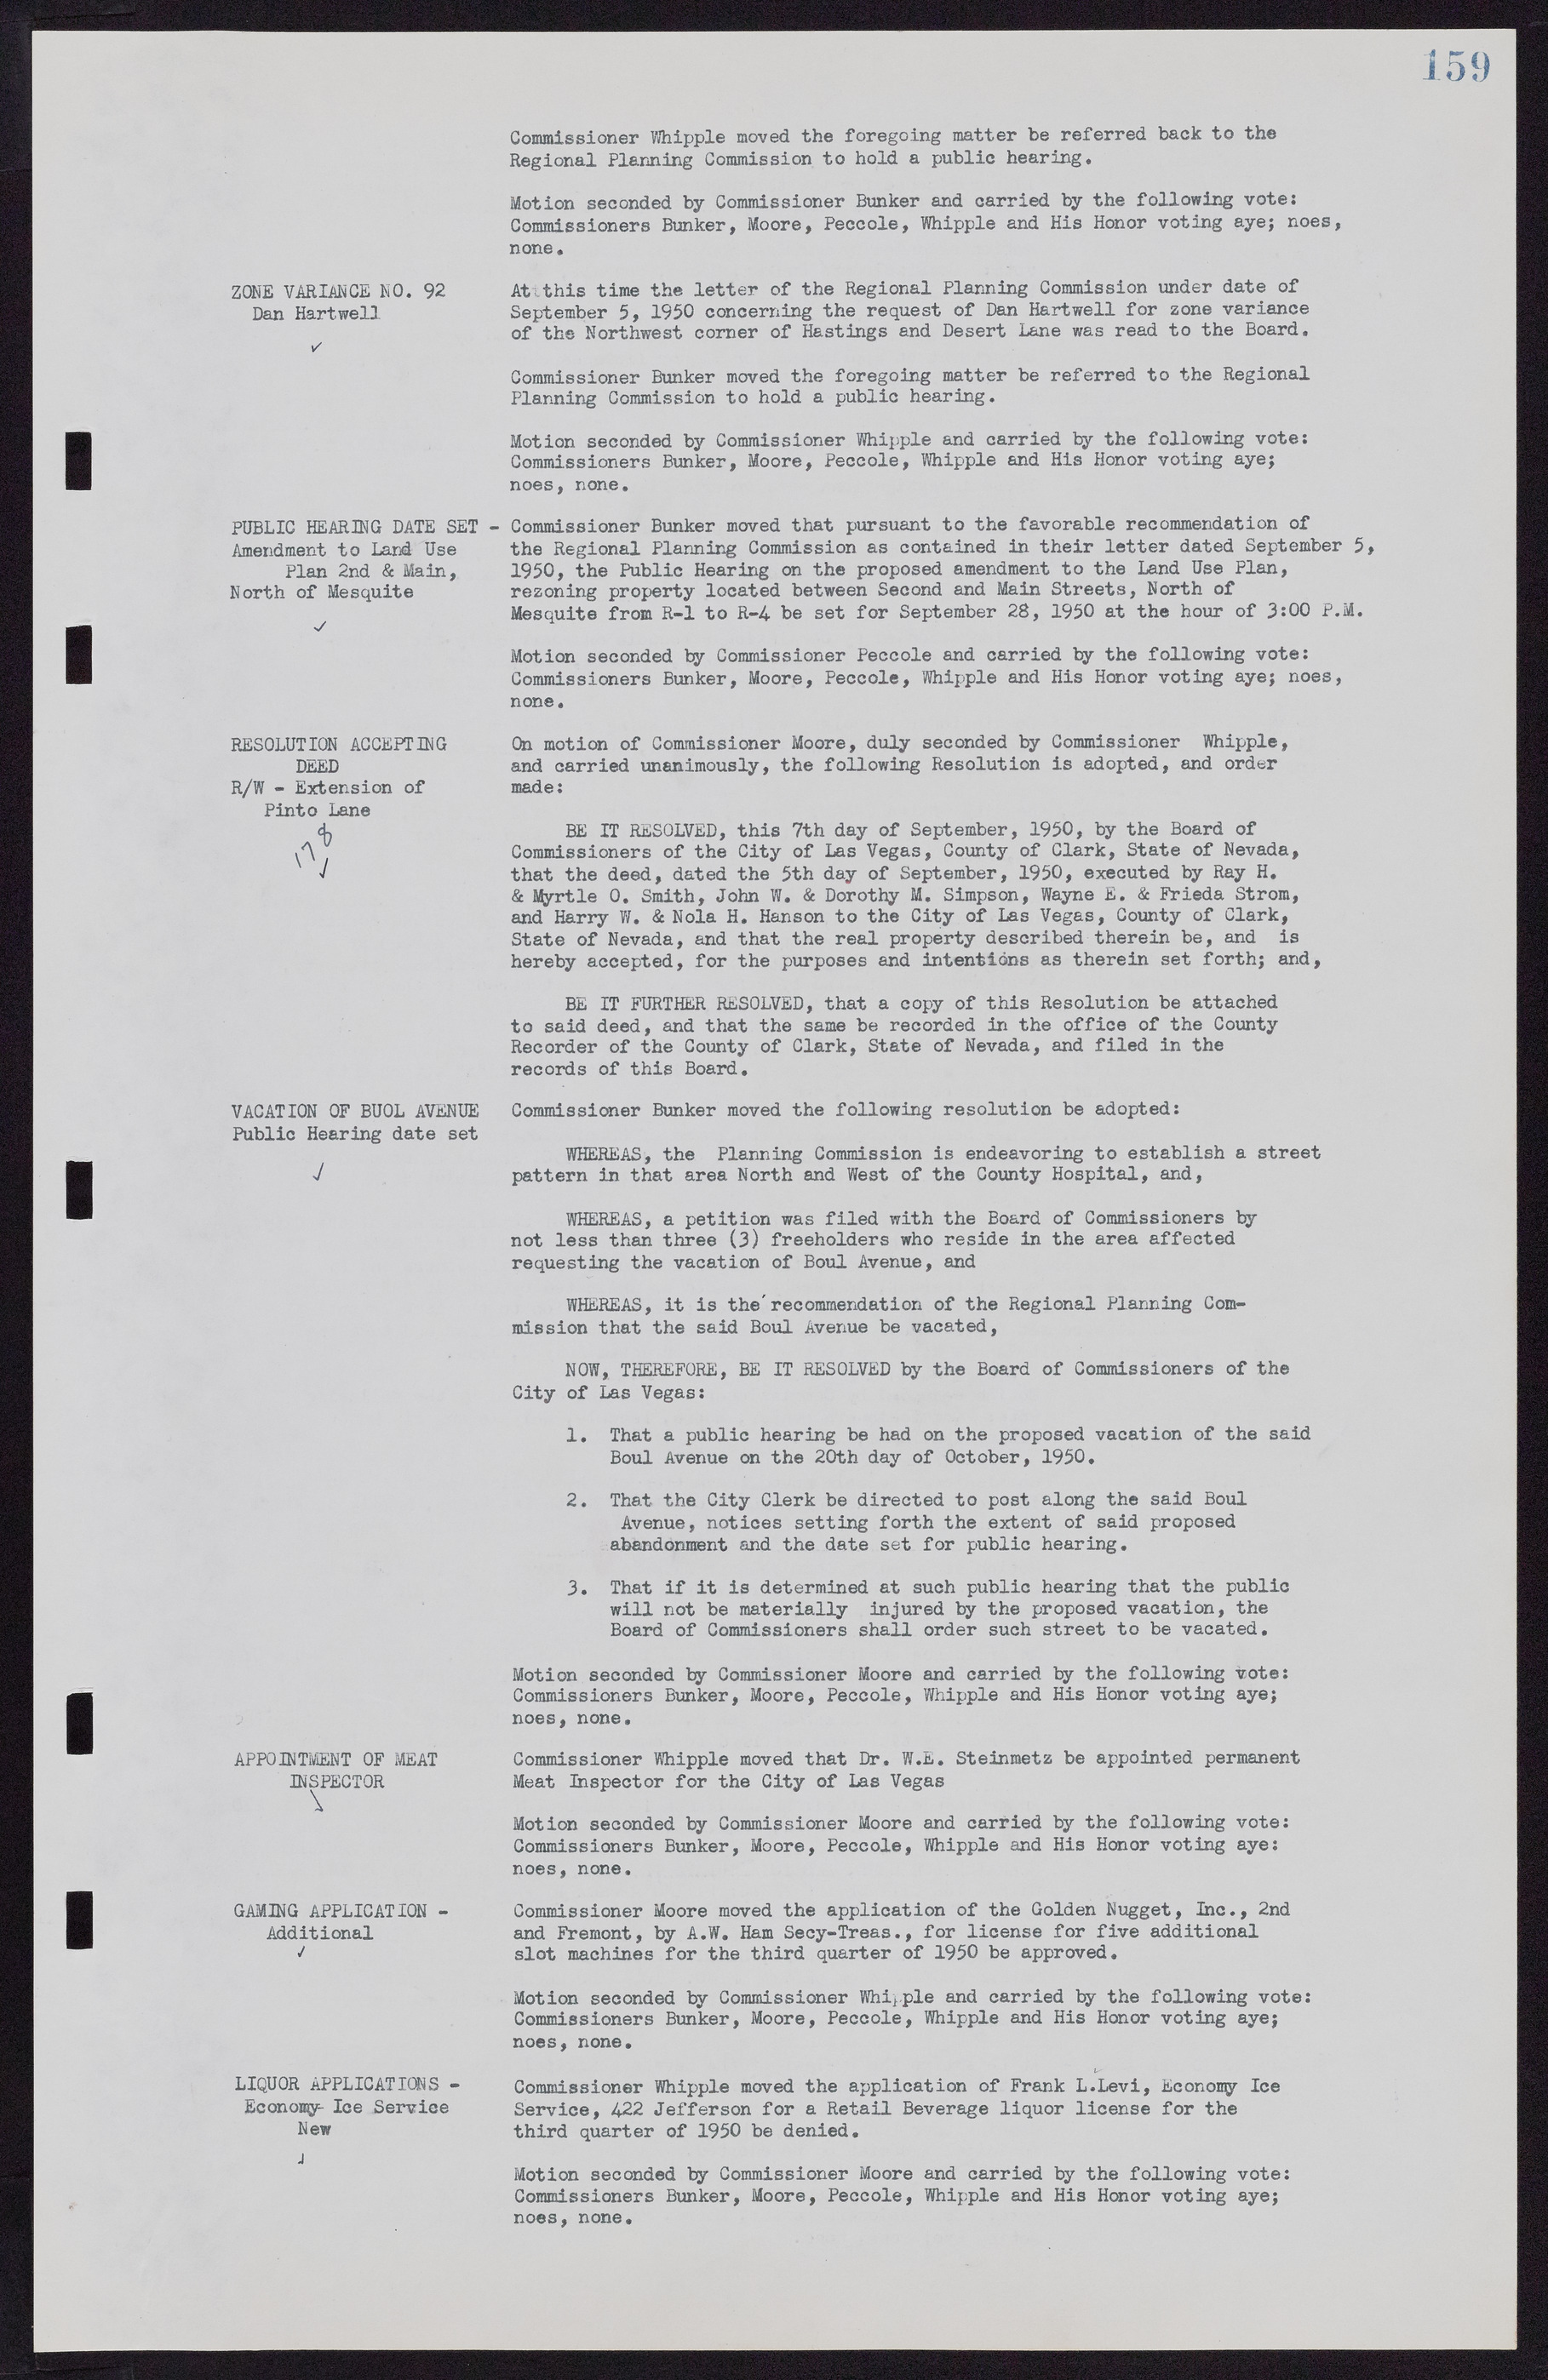 Las Vegas City Commission Minutes, November 7, 1949 to May 21, 1952, lvc000007-169